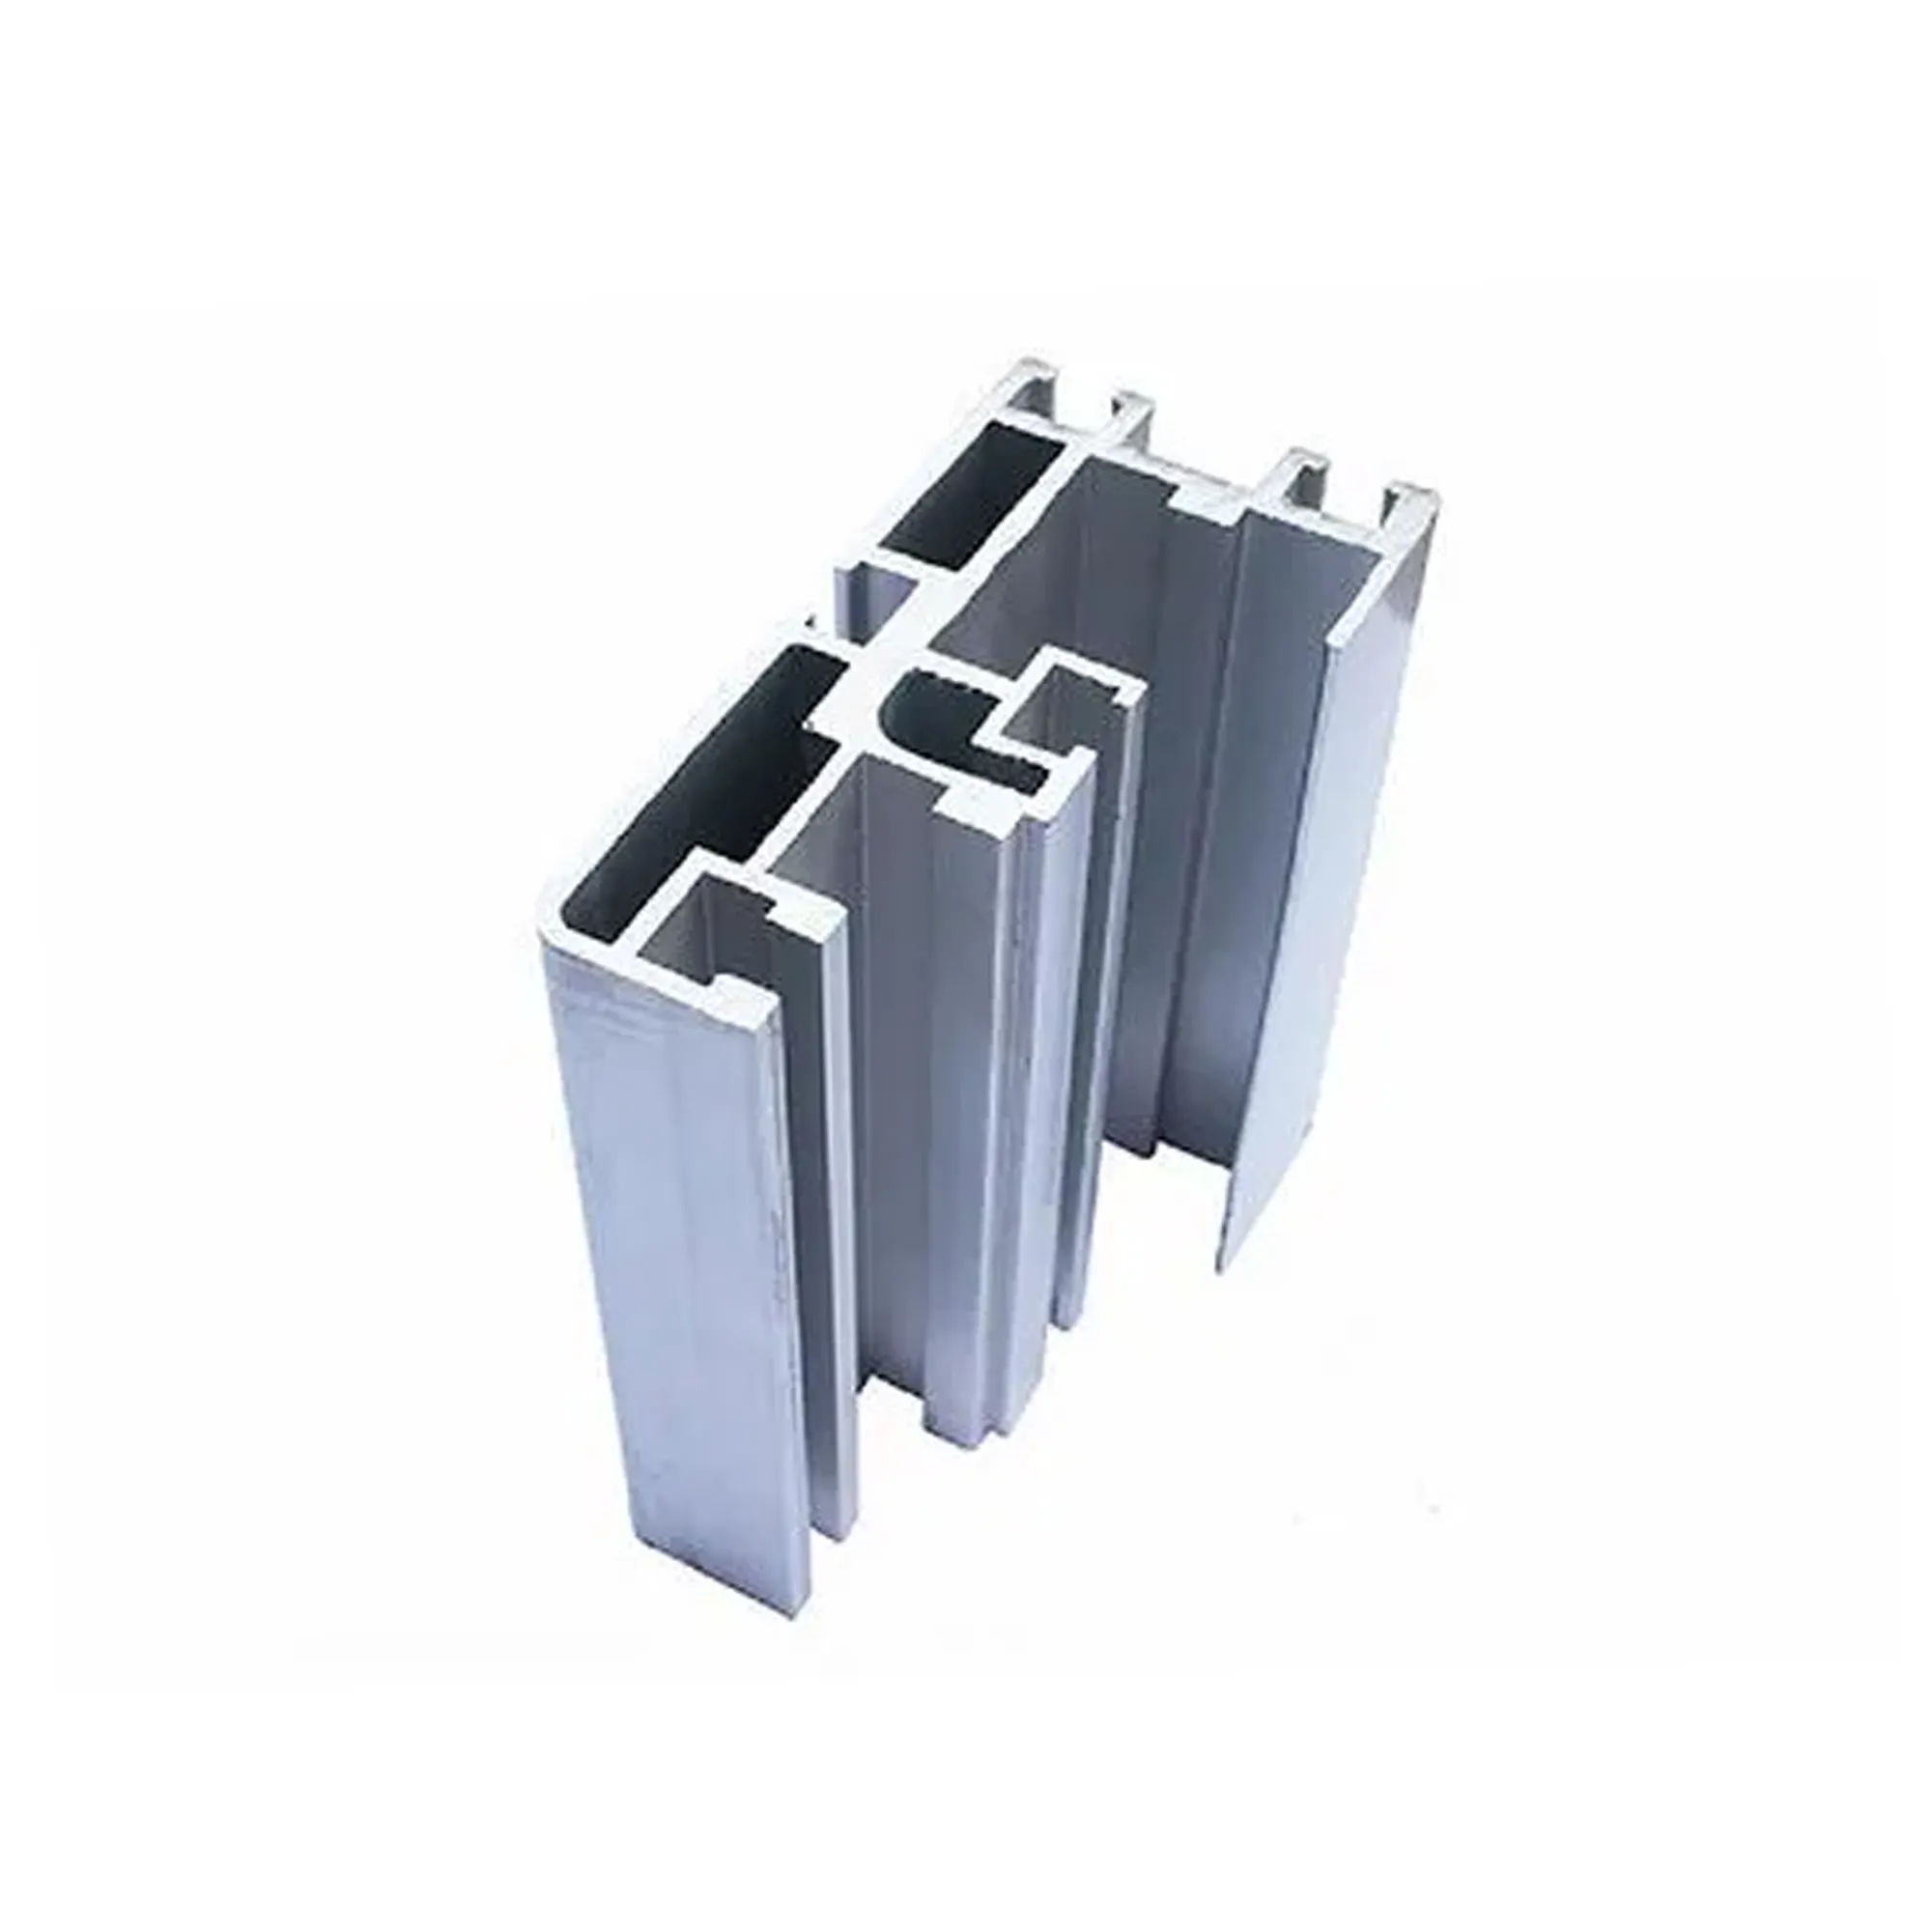 Profils en aluminium extrudés par extrusion en aluminium personnalisée de service OEM Profils extrudés T6 en aluminium 6061